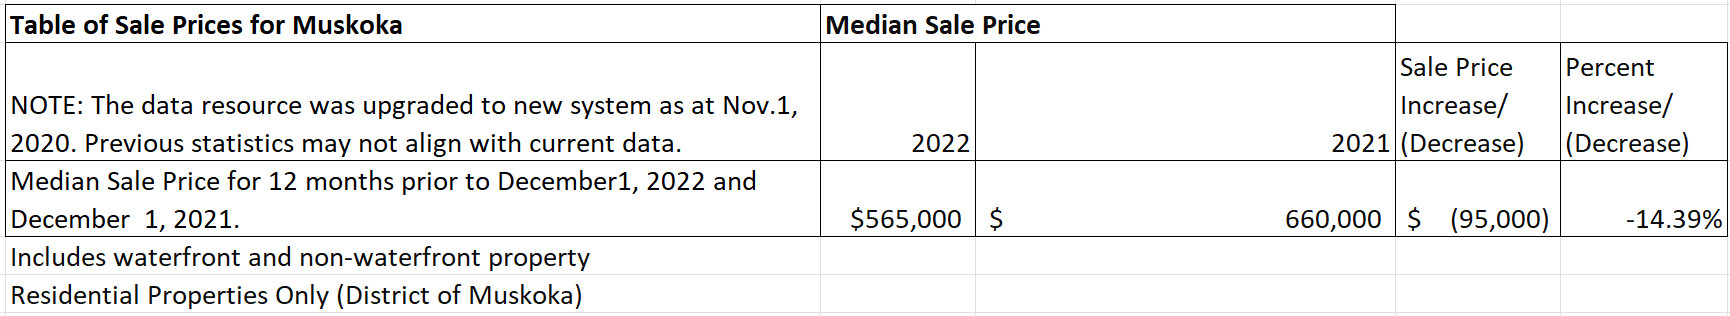 Muskoka Real Estate Sale Prices